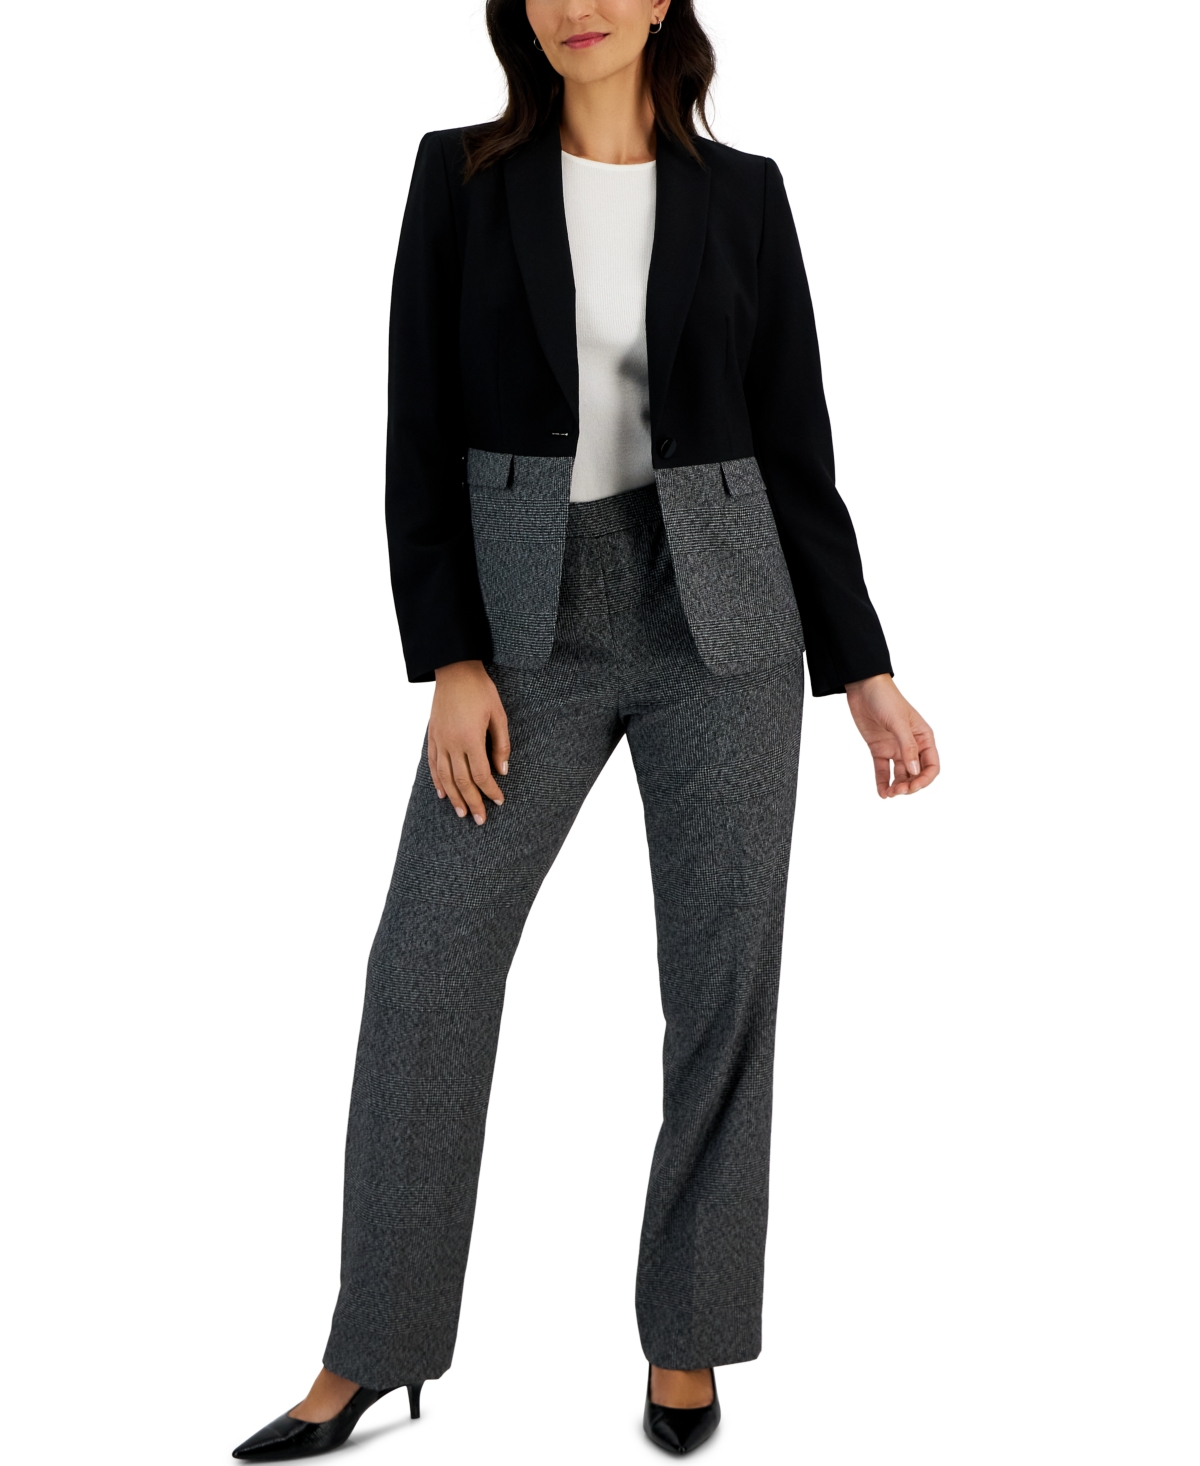 Women's Houndstooth Colorblocked Jacket & Side-Zip Pants - Black/White